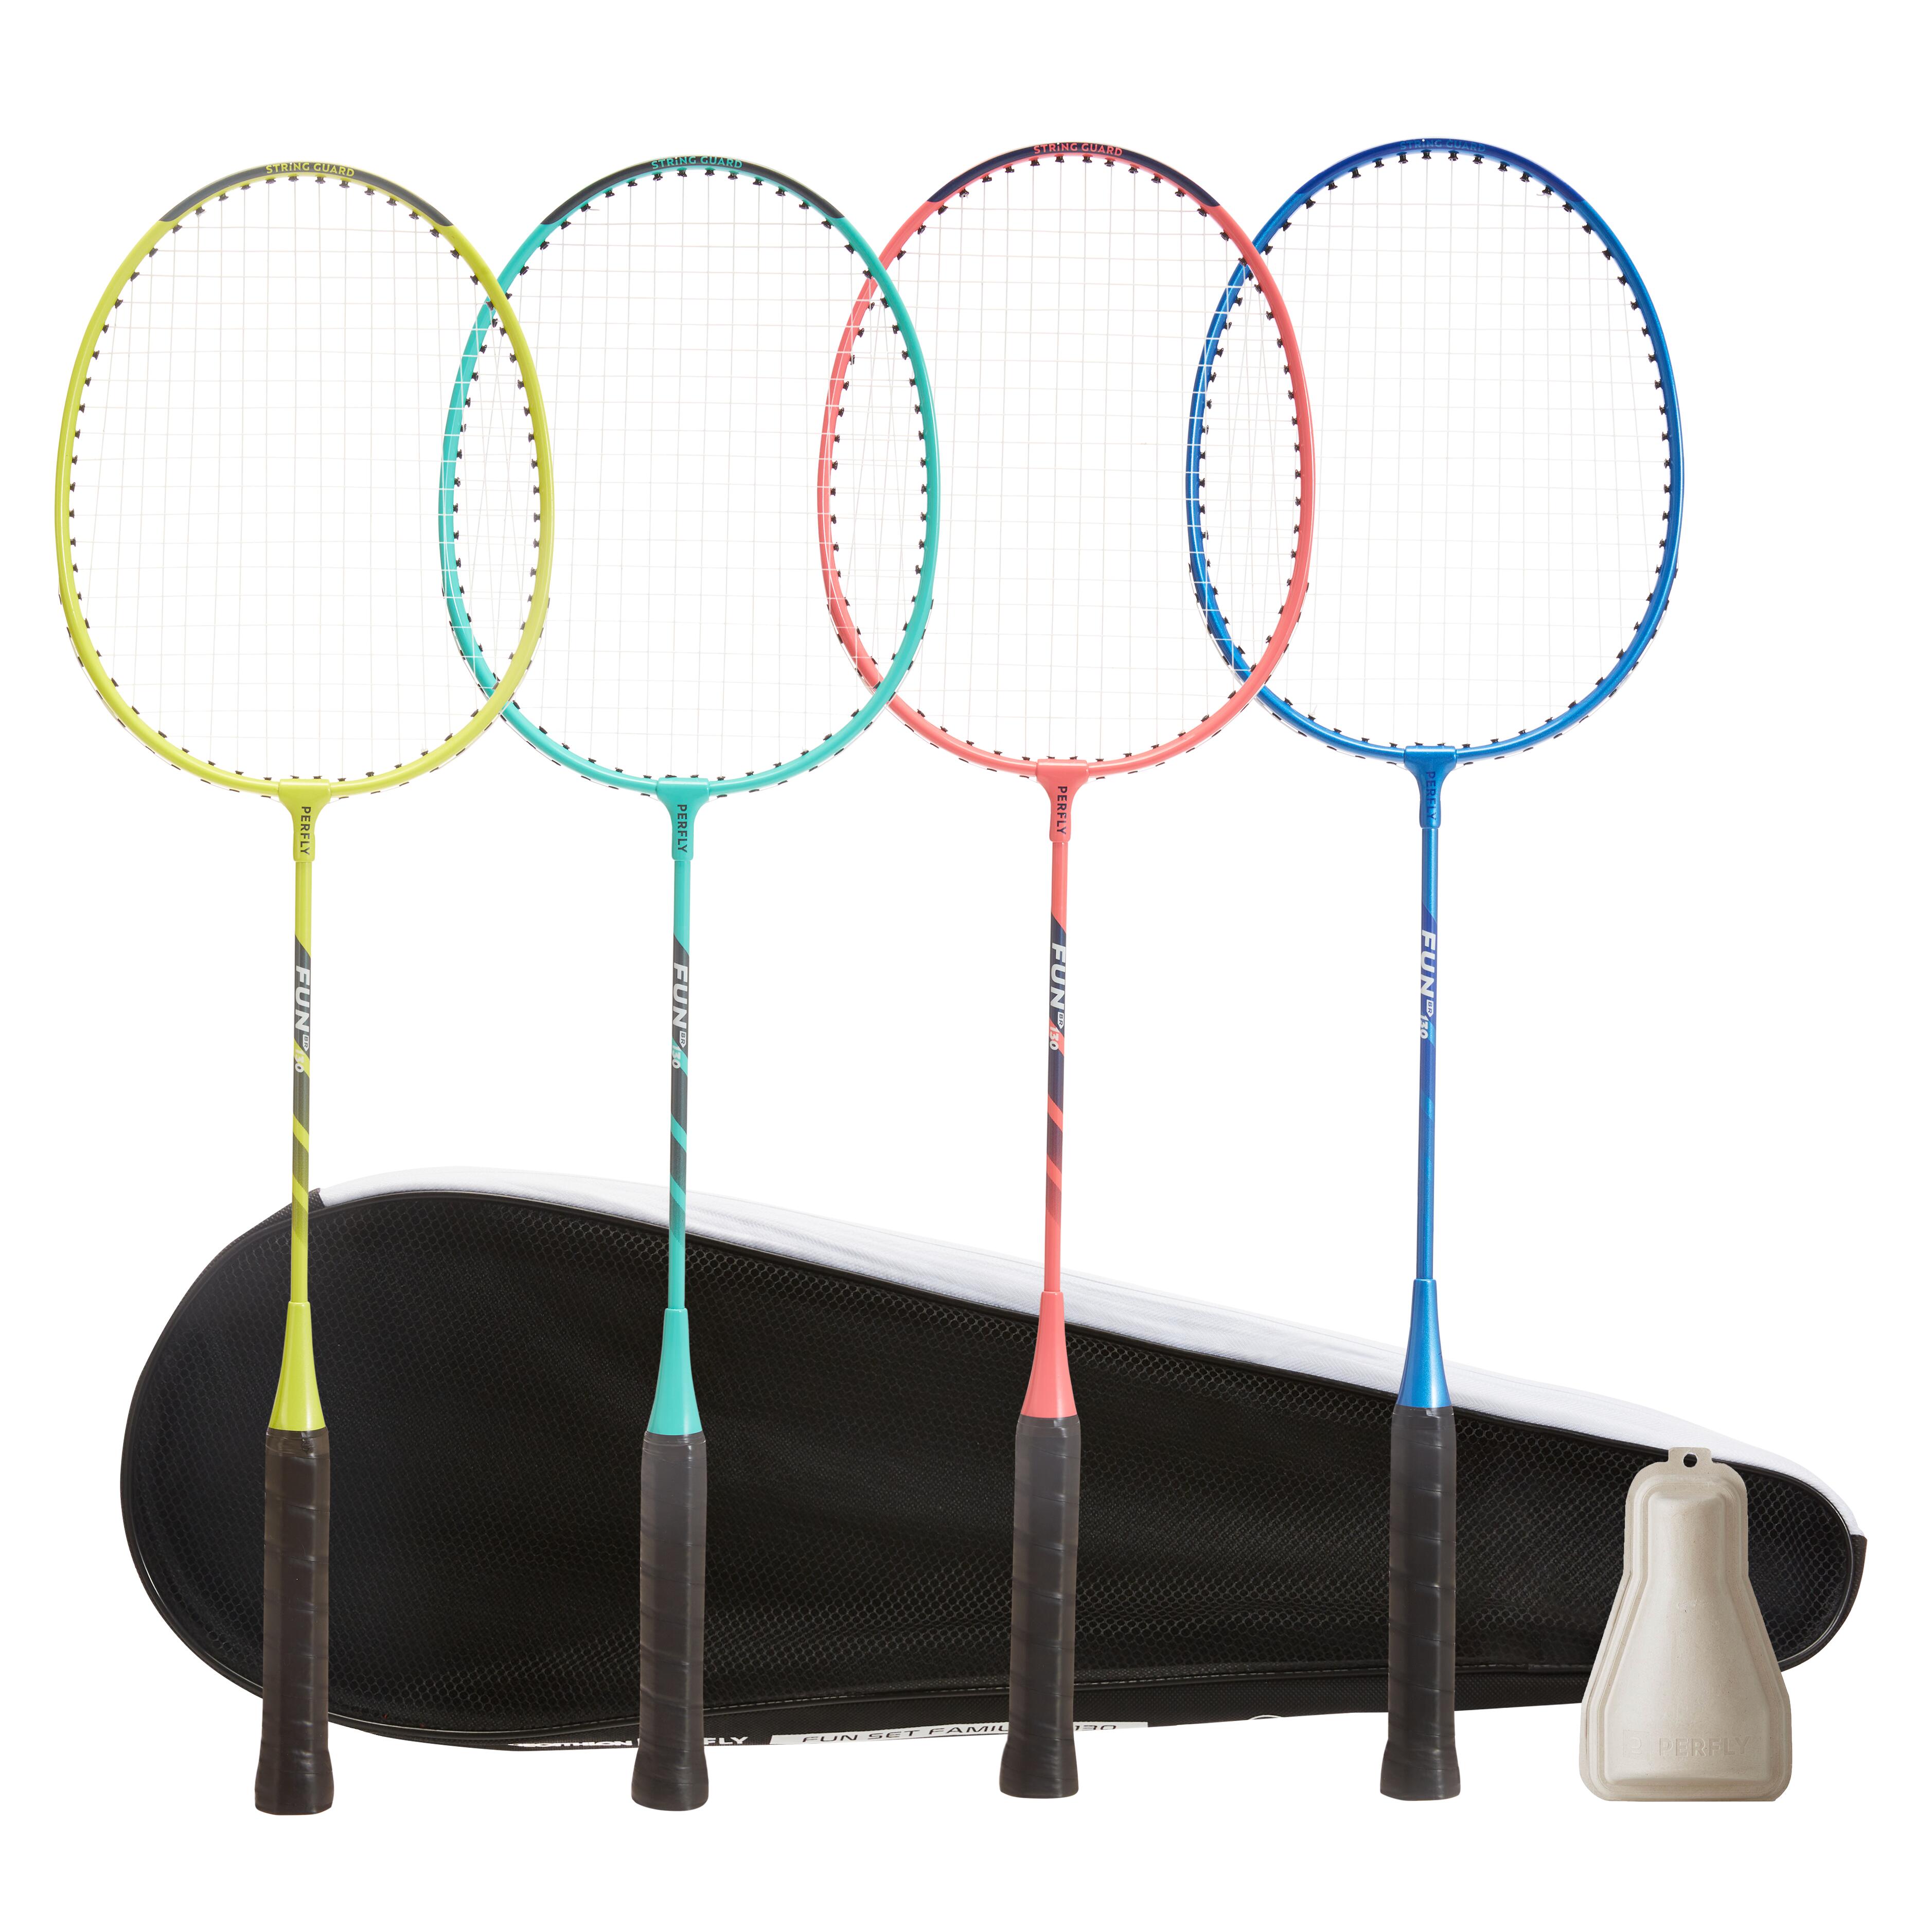 Decathlon | Kit badminton adulto FUN BR 130 4 racchette |  Perfly